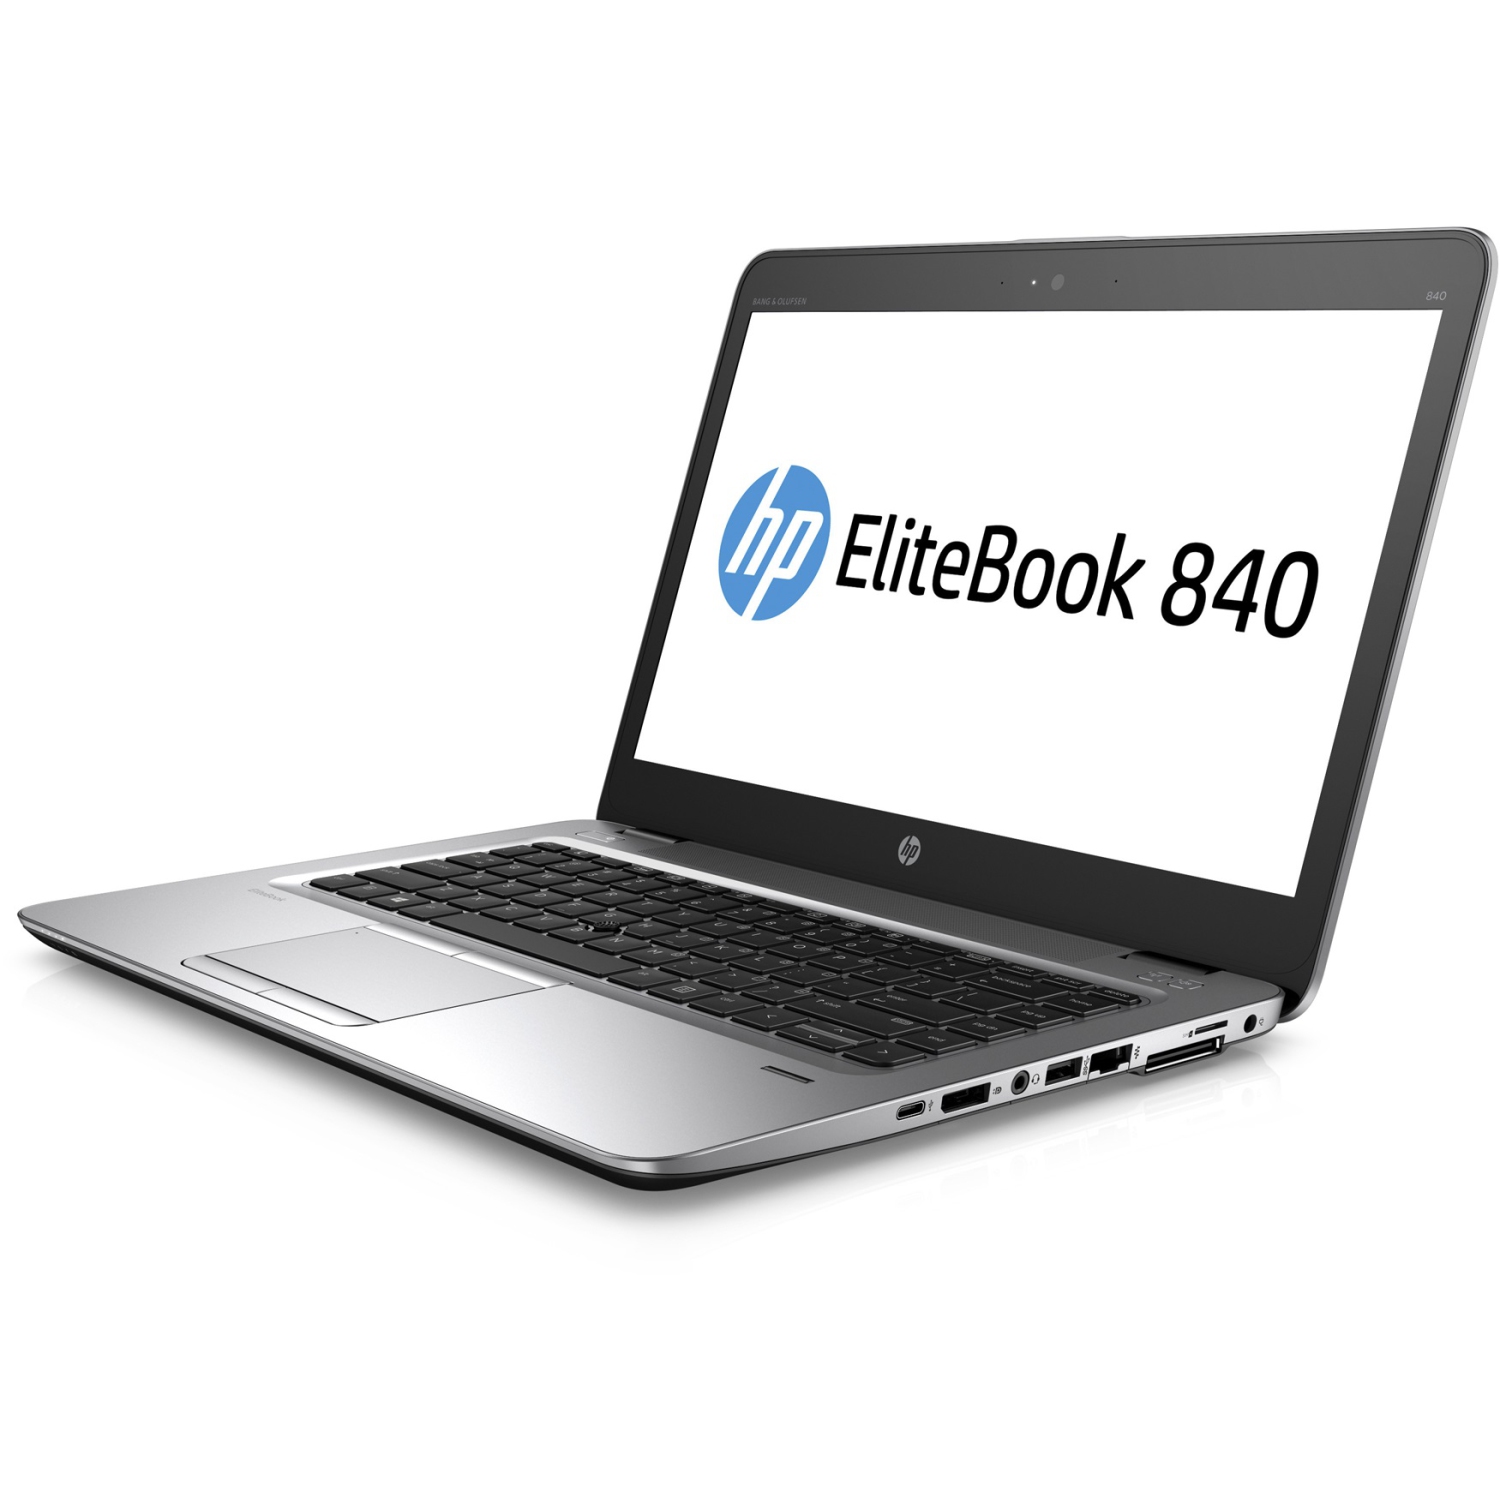 Refurbished (Good) - HP EliteBook 840 G3 14" Laptop - Intel Core i5-6200u - 8GB RAM - 256GB SSD - Windows 10 Pro(Grade A)